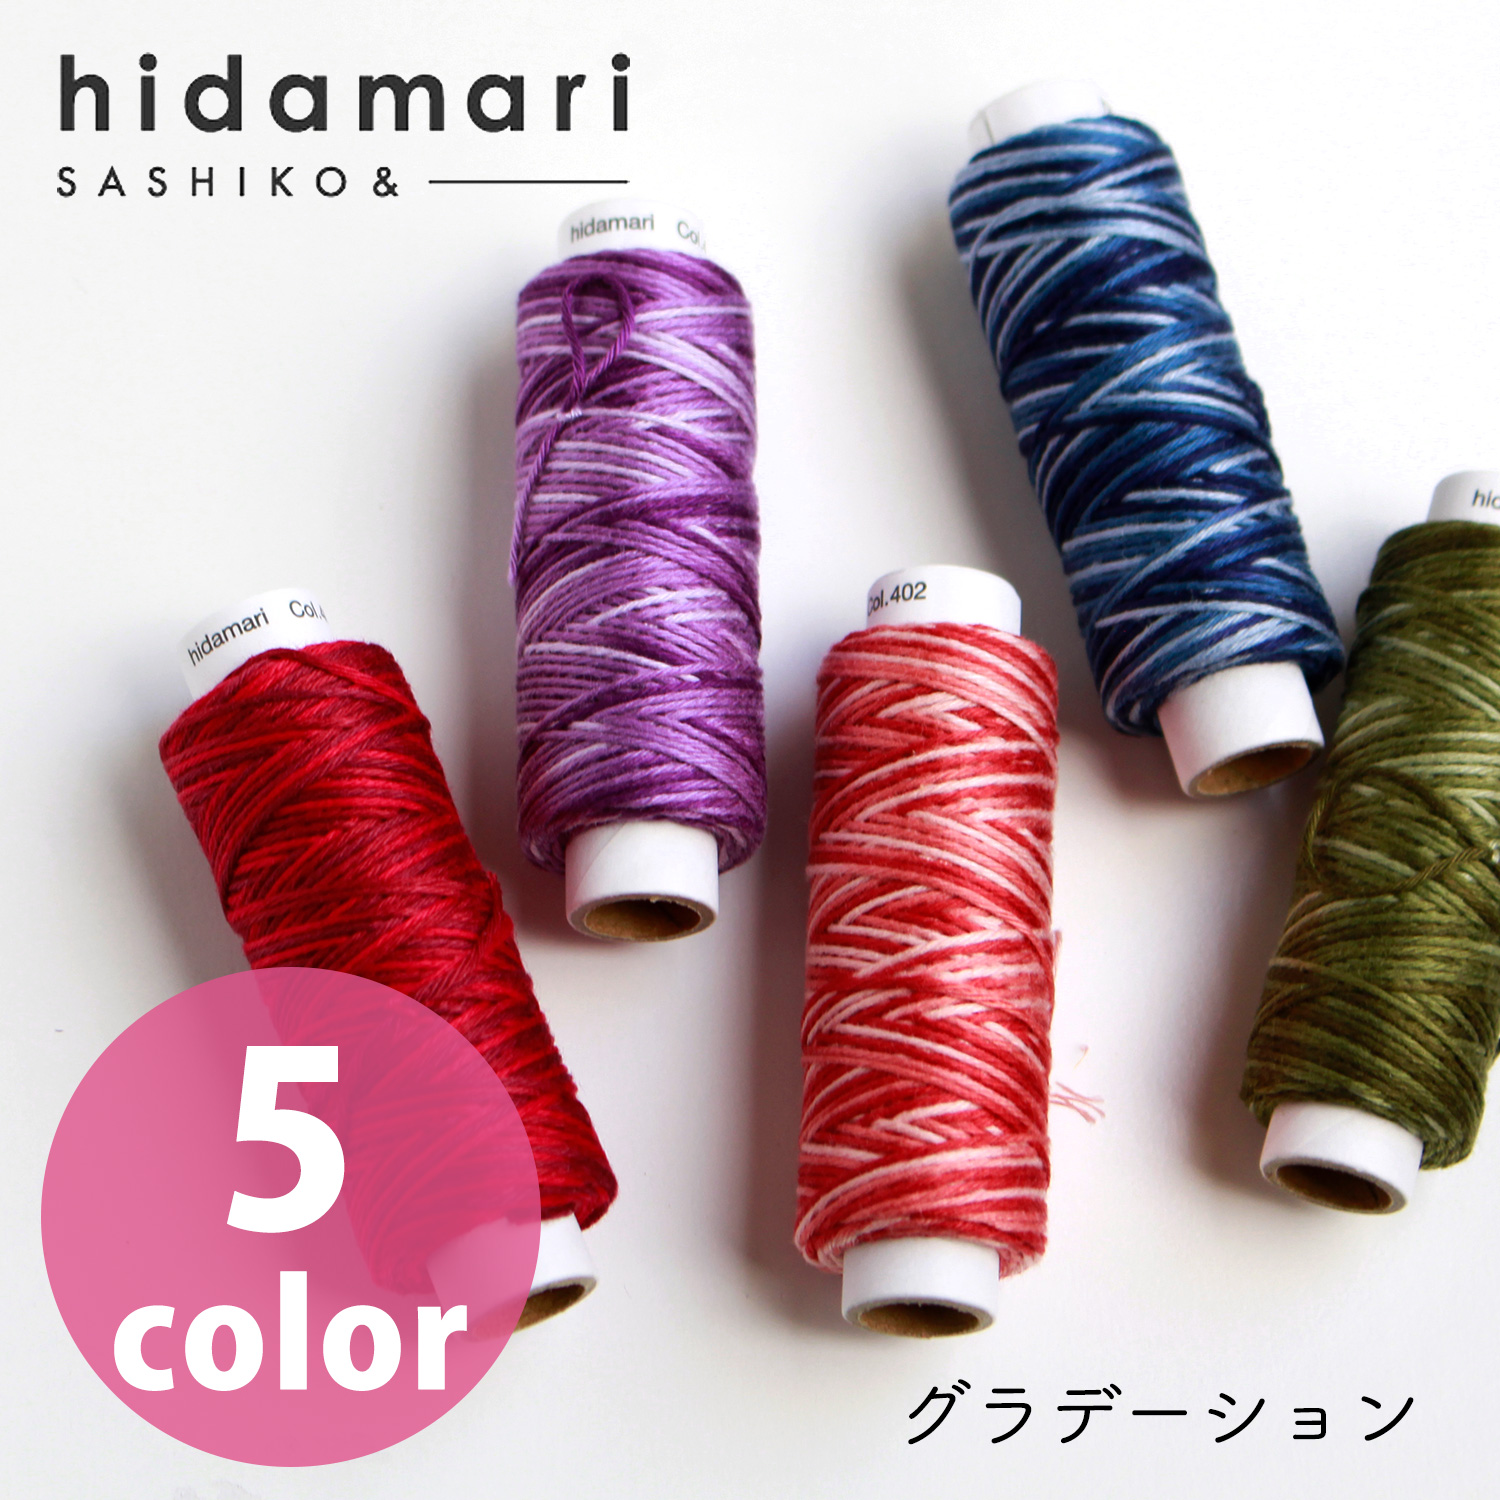 【renewal】CS122302-401~405 Cosmo Sashiko Thread (Ombre) - hidamari - (pcs)